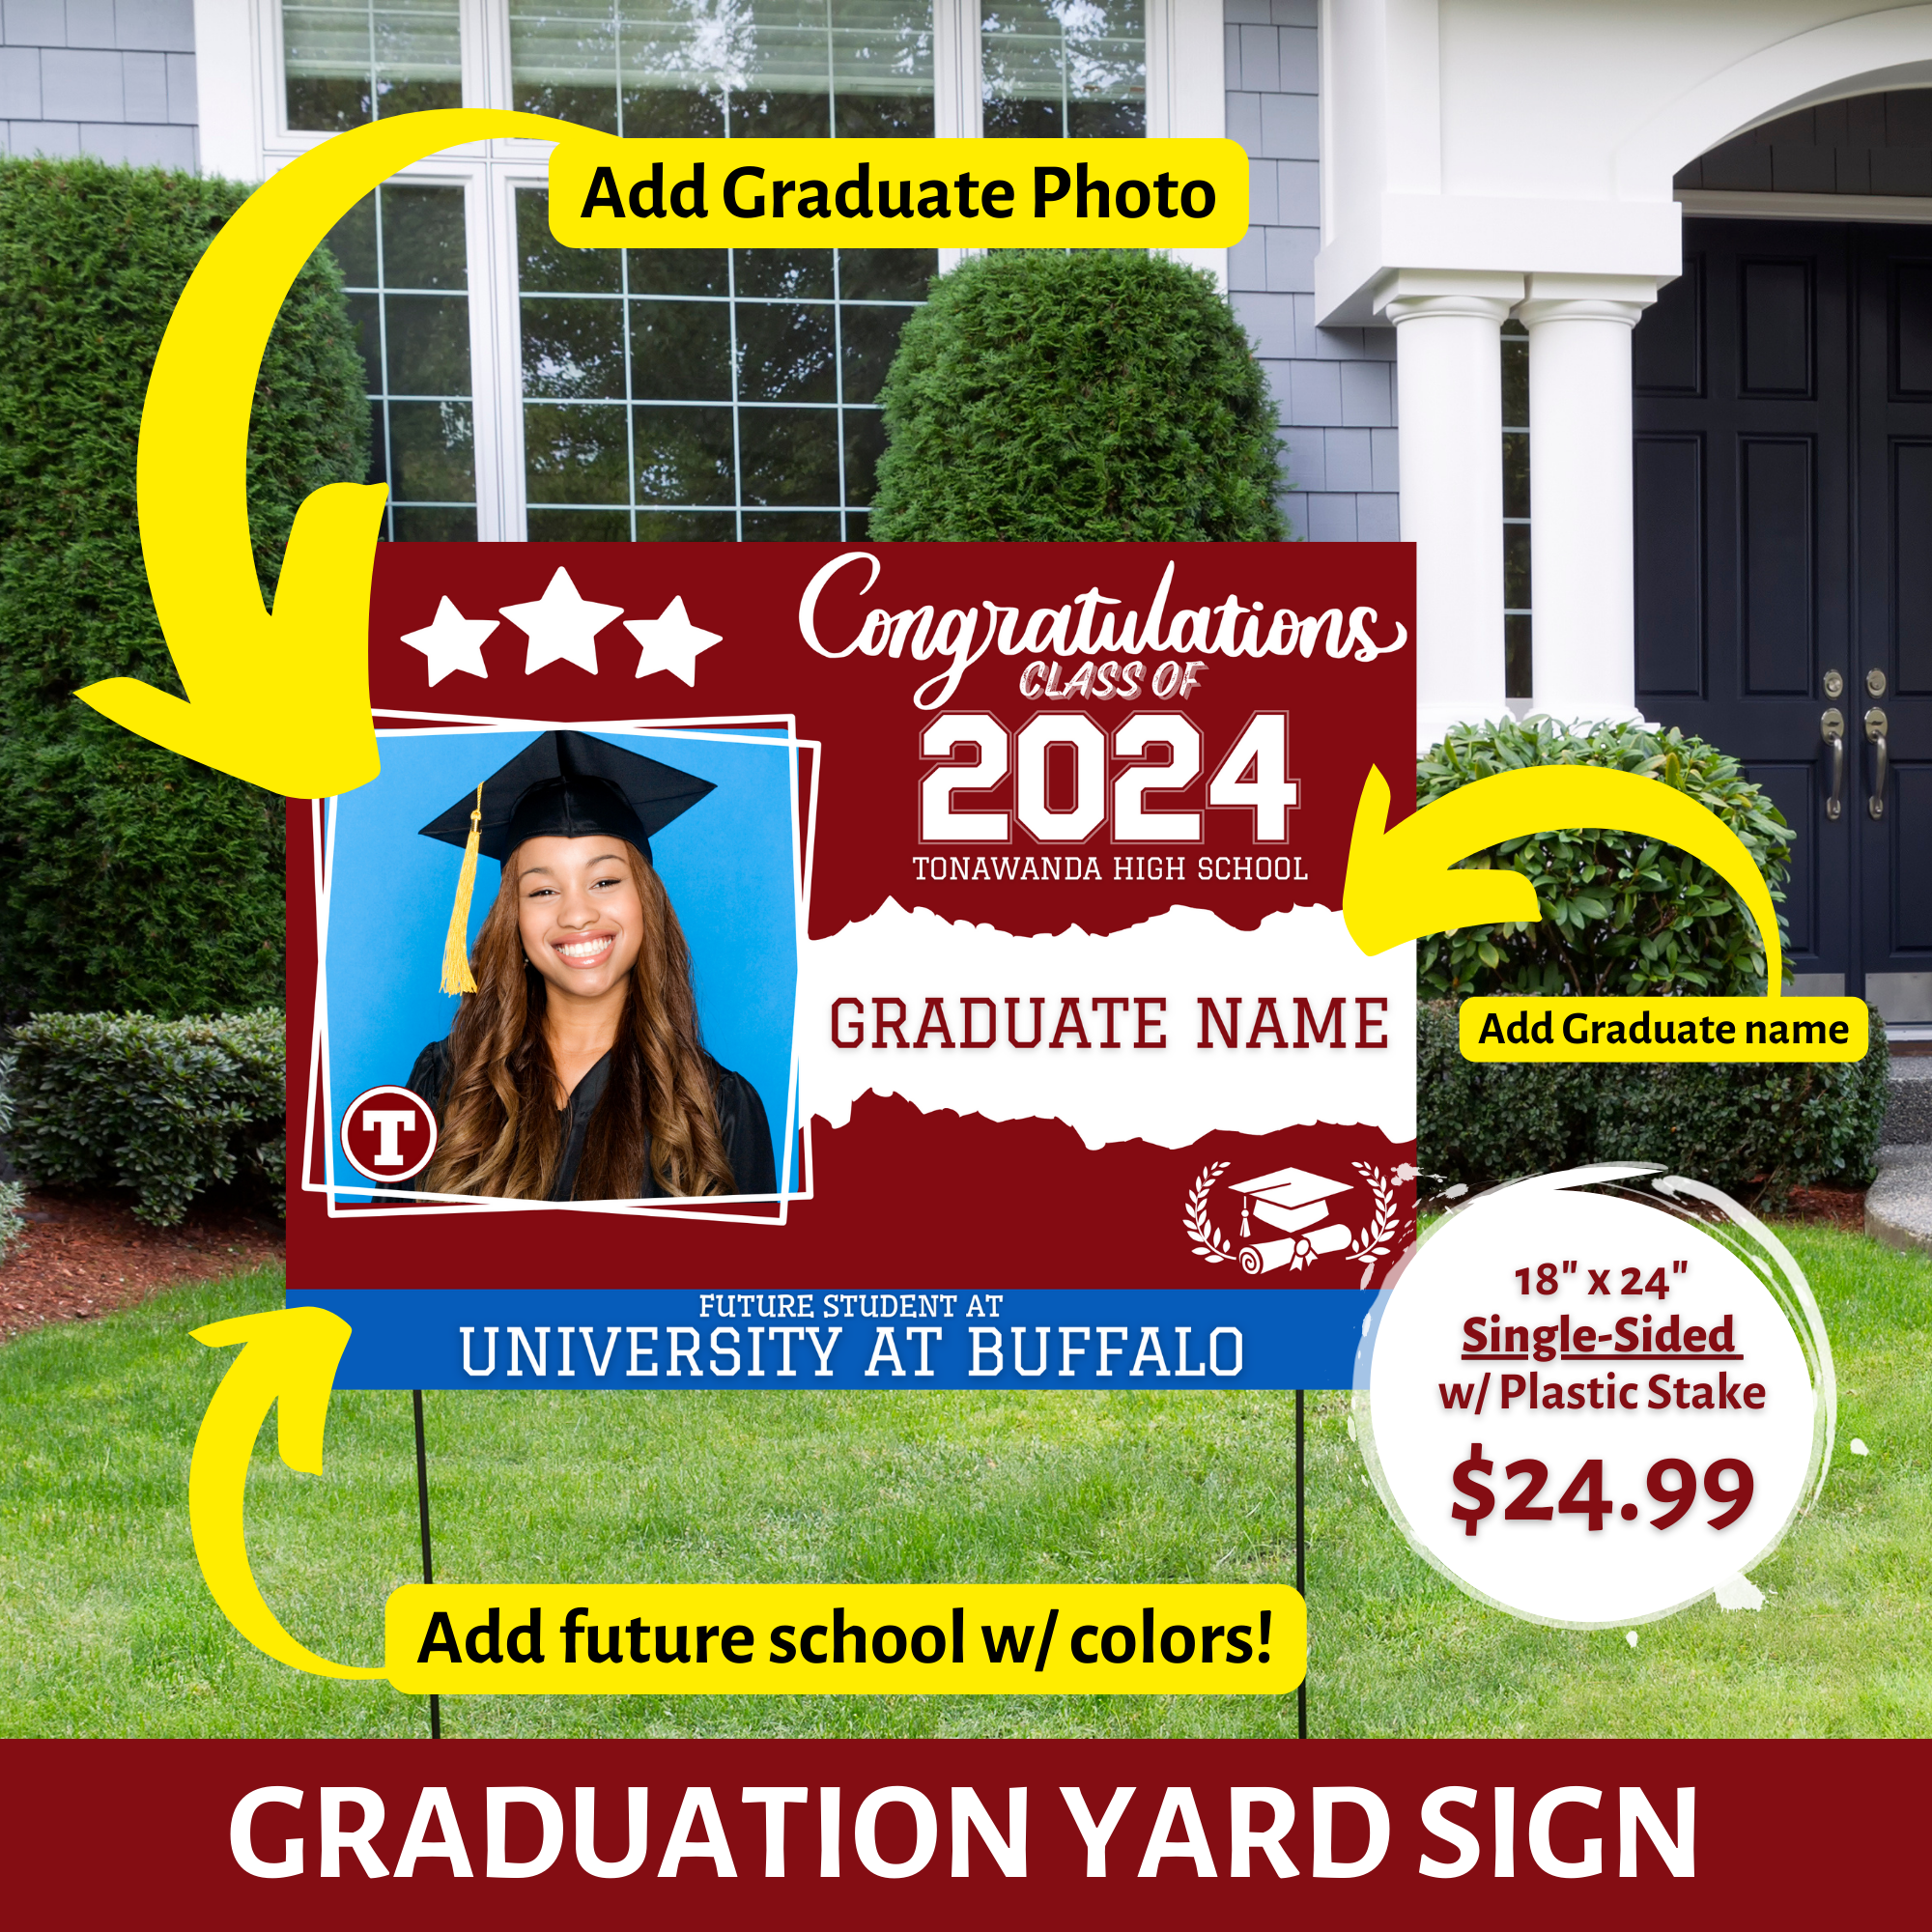 Graduation Yard Sign [Name, Photo, Future School]